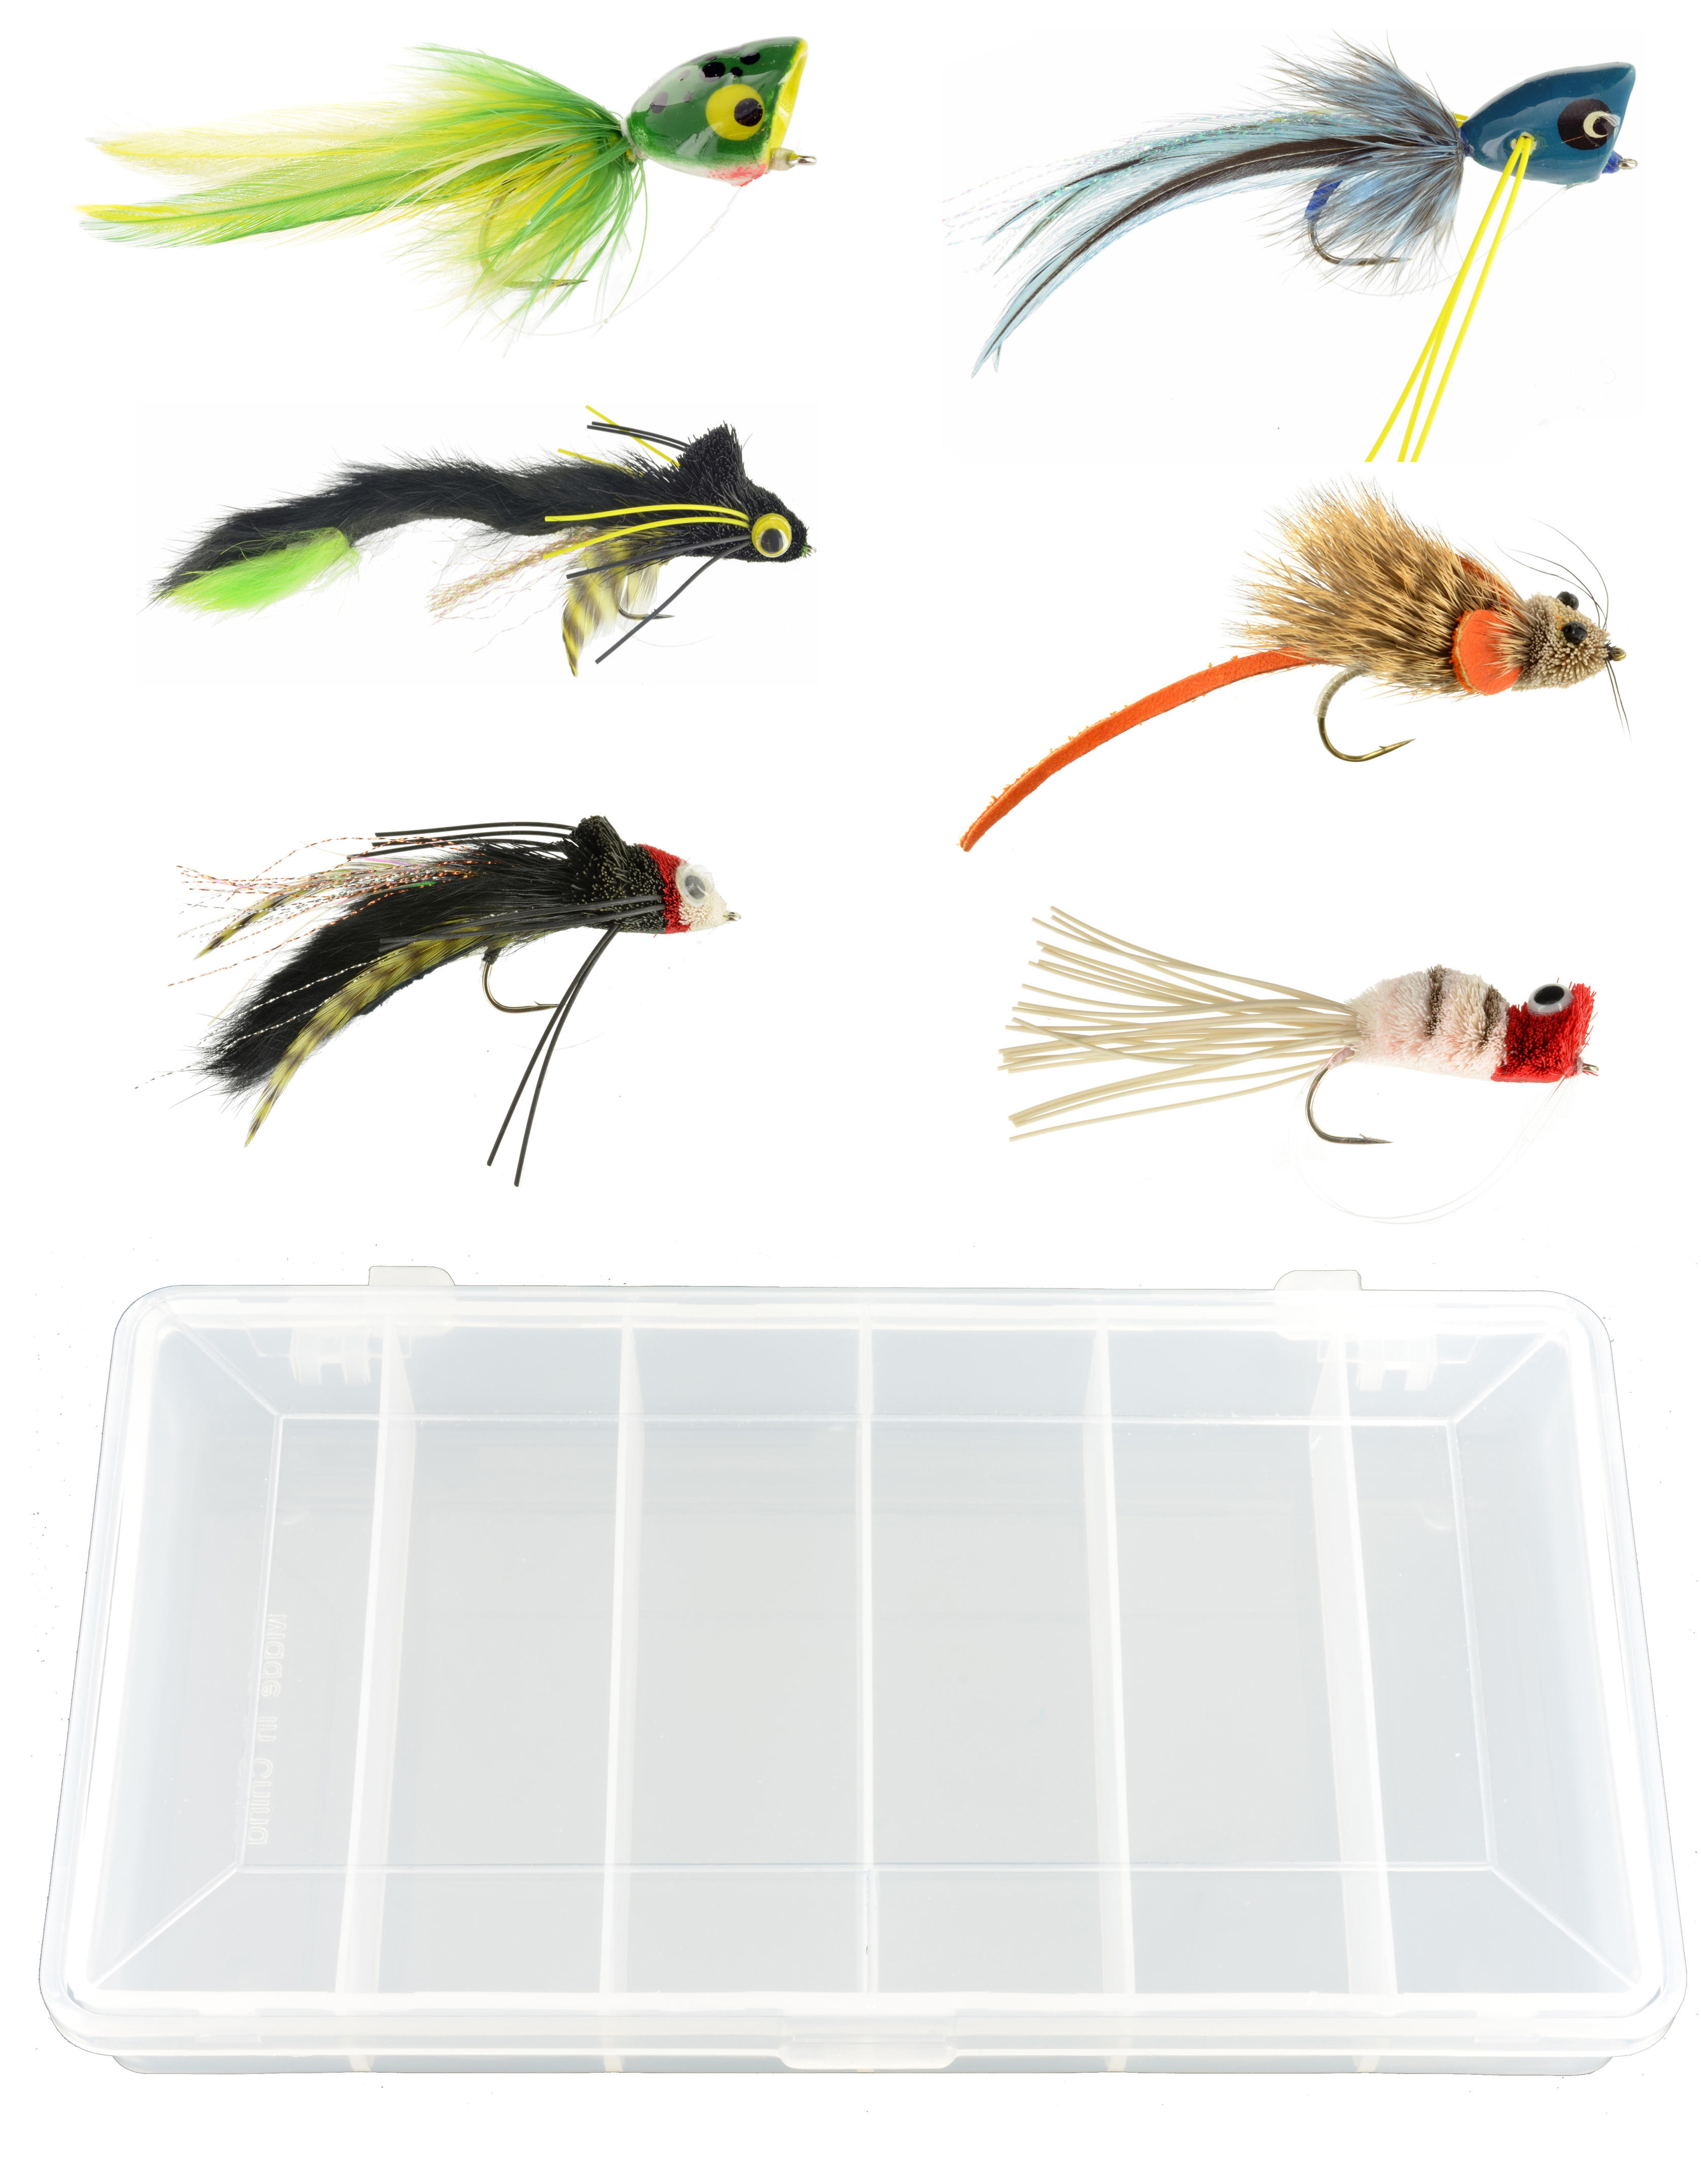 Top Water Bass & Pike Assortment - 6 Flies + Fly Box, Fly Fishing Flies  For Less